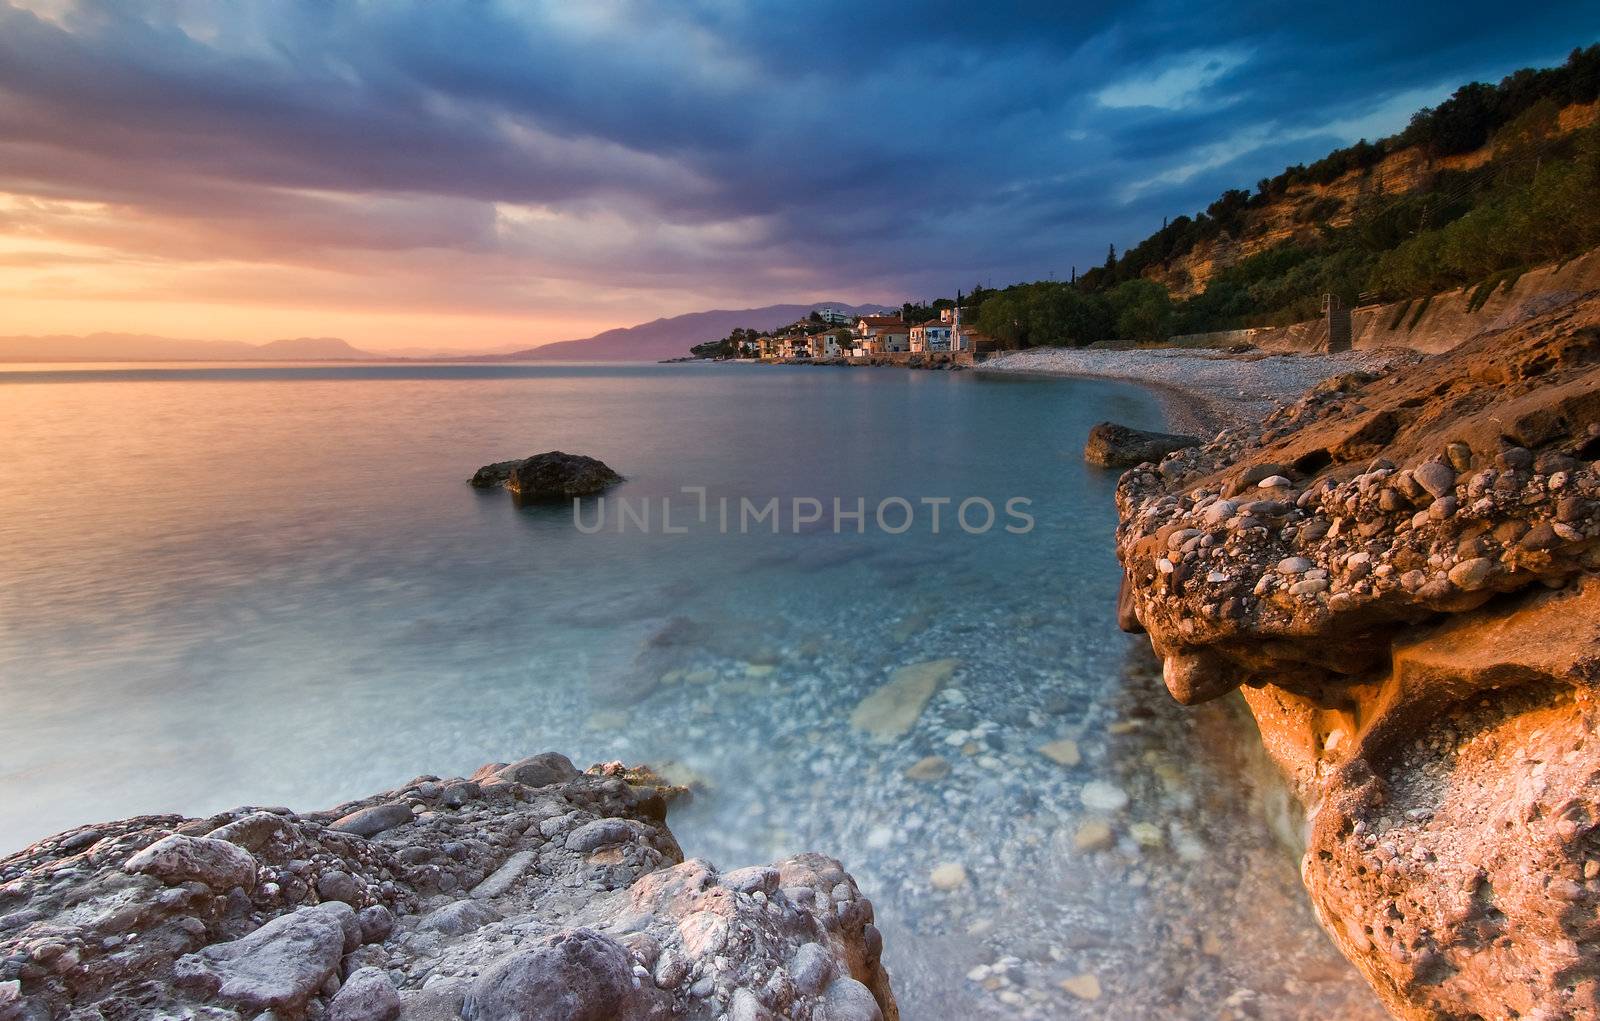 The beach at Akrogiali by akarelias